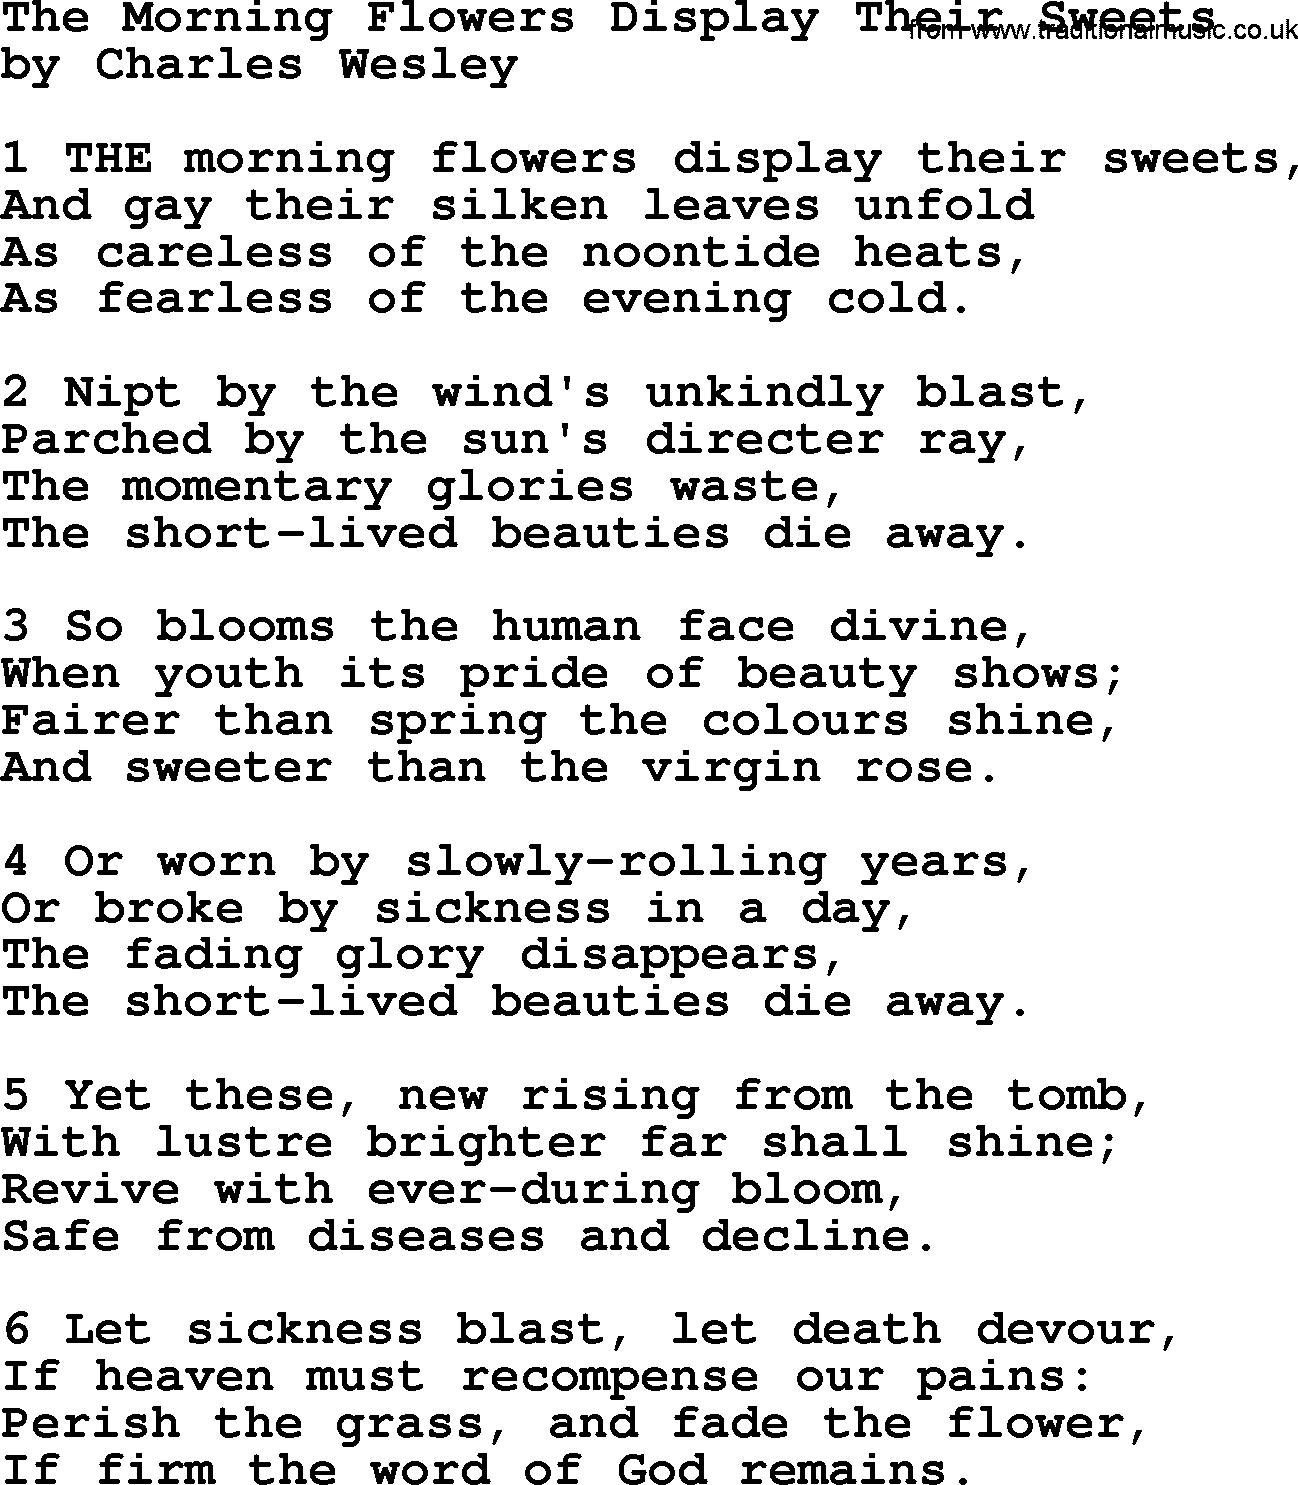 Charles Wesley hymn: The Morning Flowers Display Their Sweets, lyrics